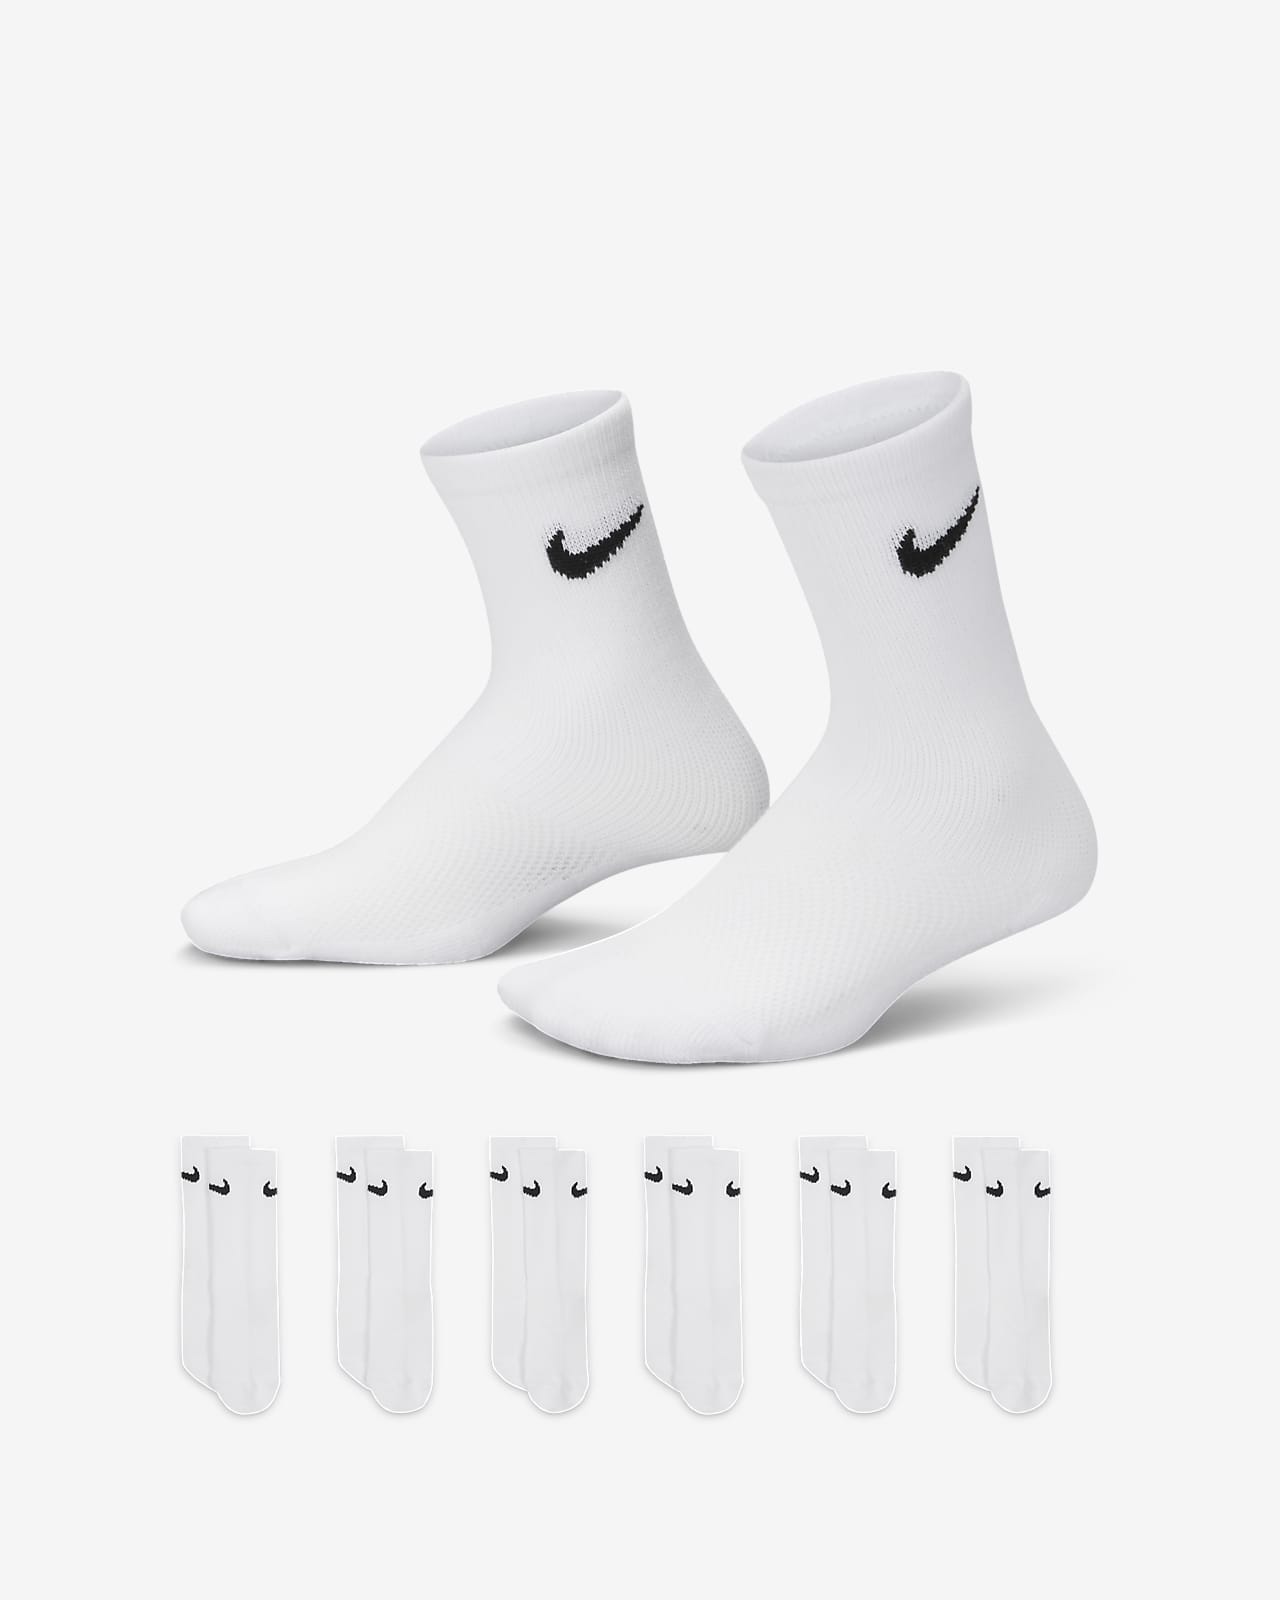 Nike Mesh and Cushioned Crew Socks Box Set (6 Pairs) Little Kids' Socks